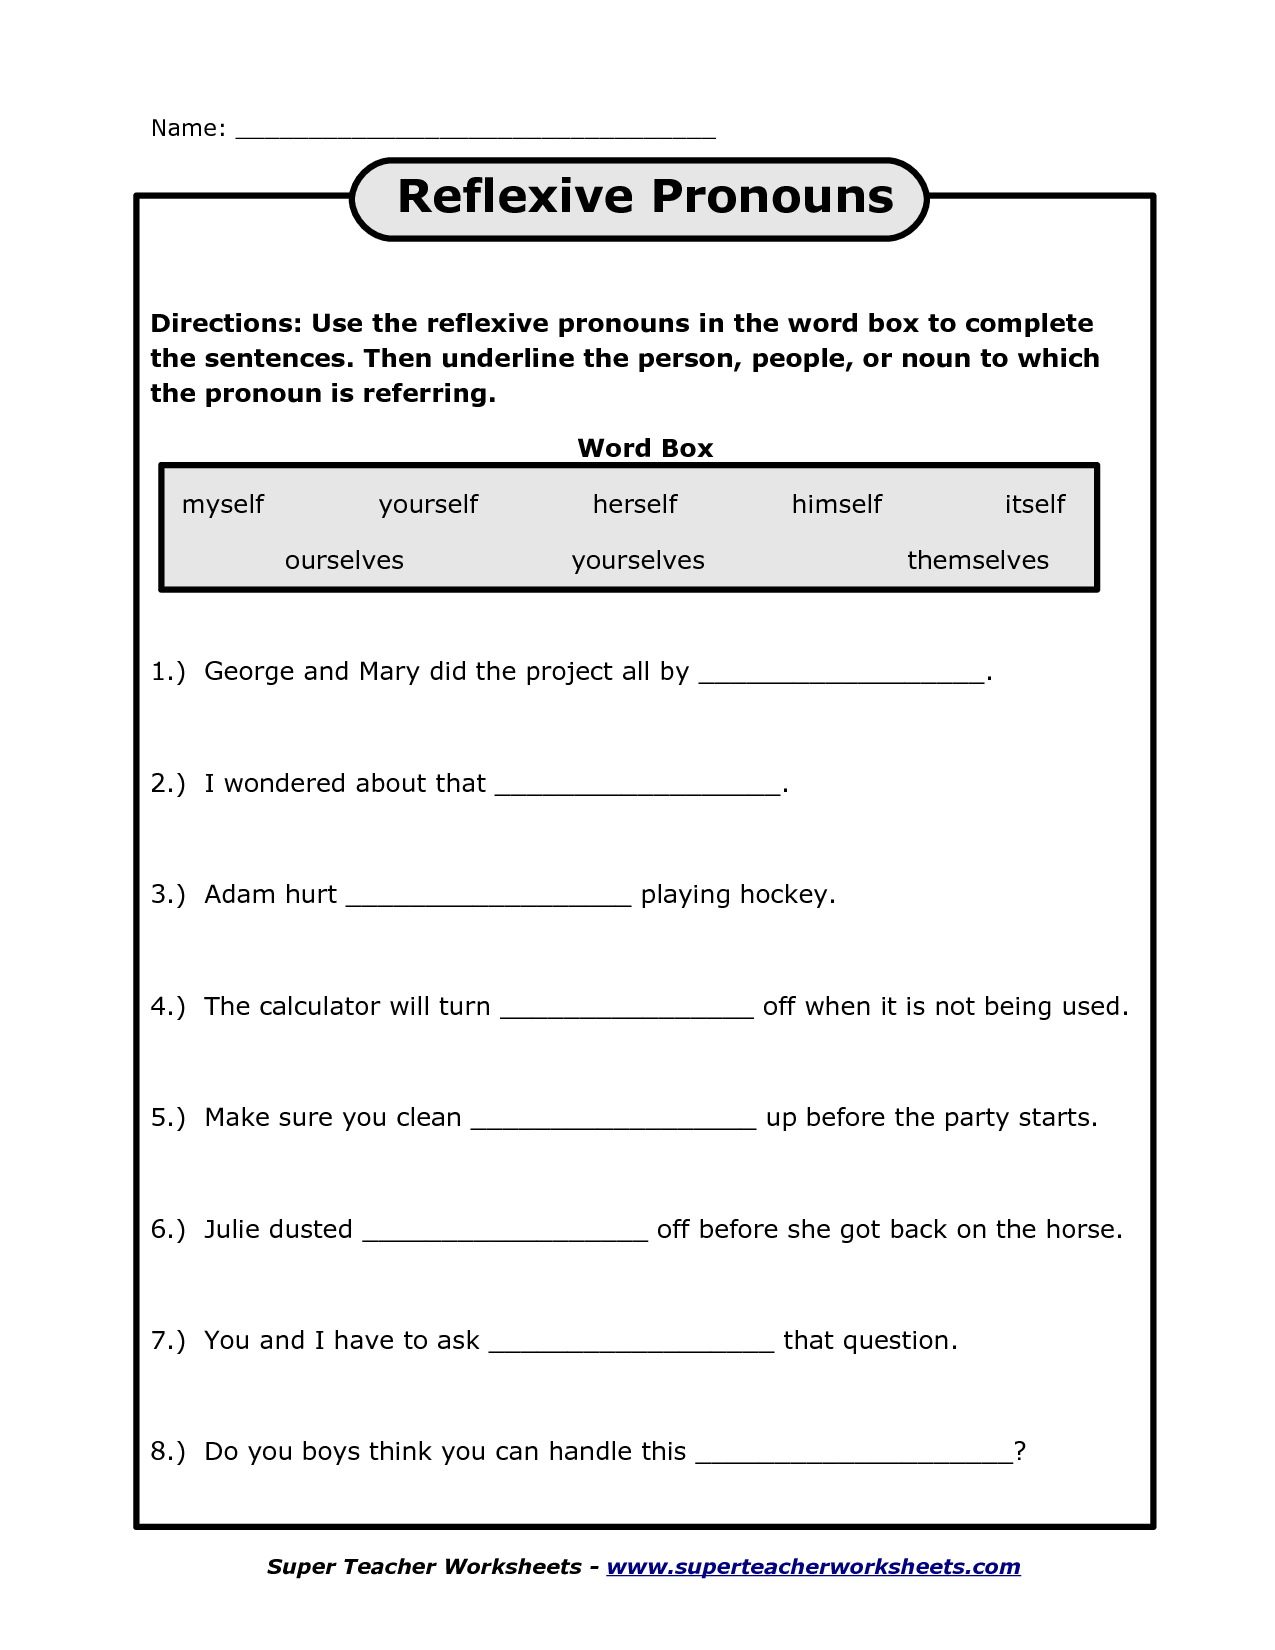 13-best-images-of-intensive-pronouns-worksheets-reflexive-pronouns